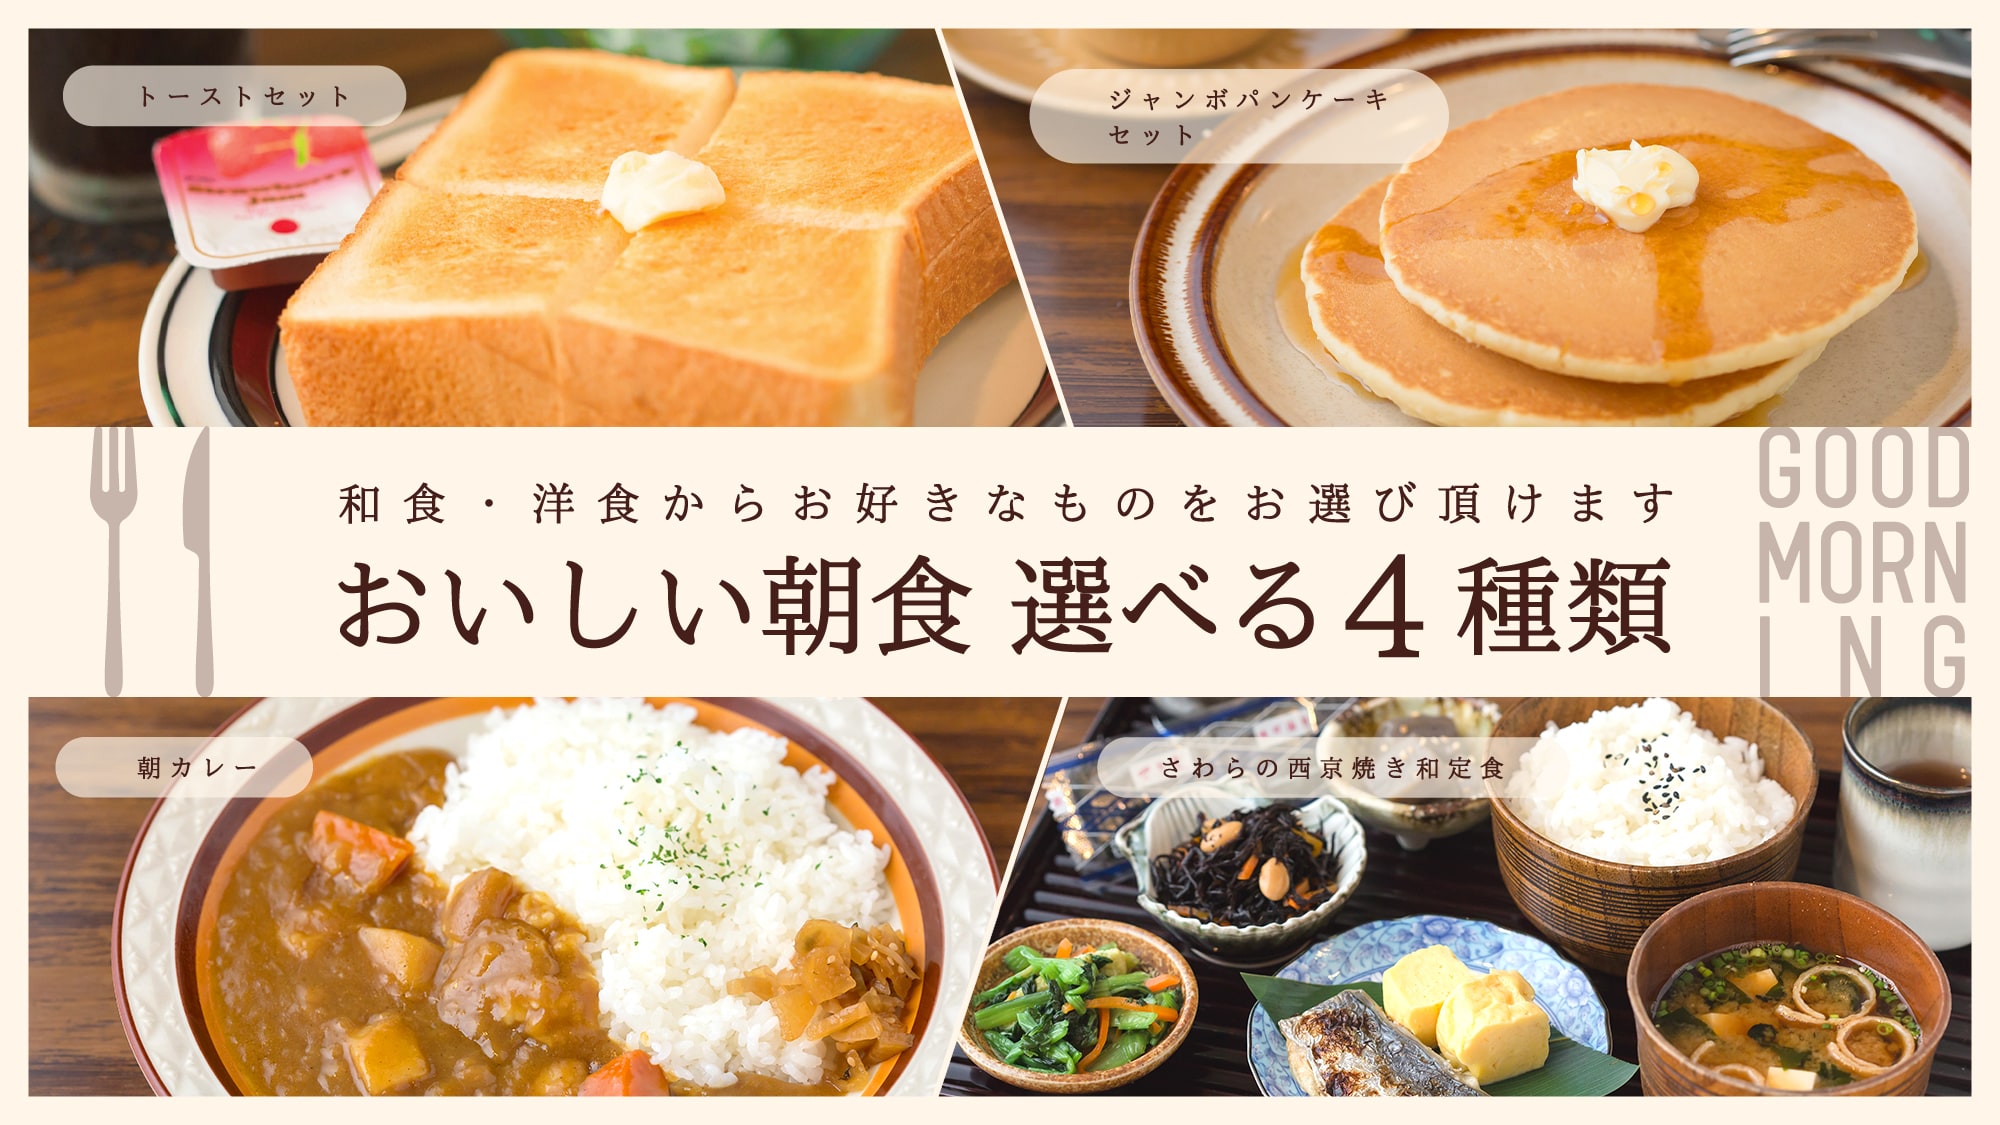 For breakfast, you can choose between Japanese and Western set menus.